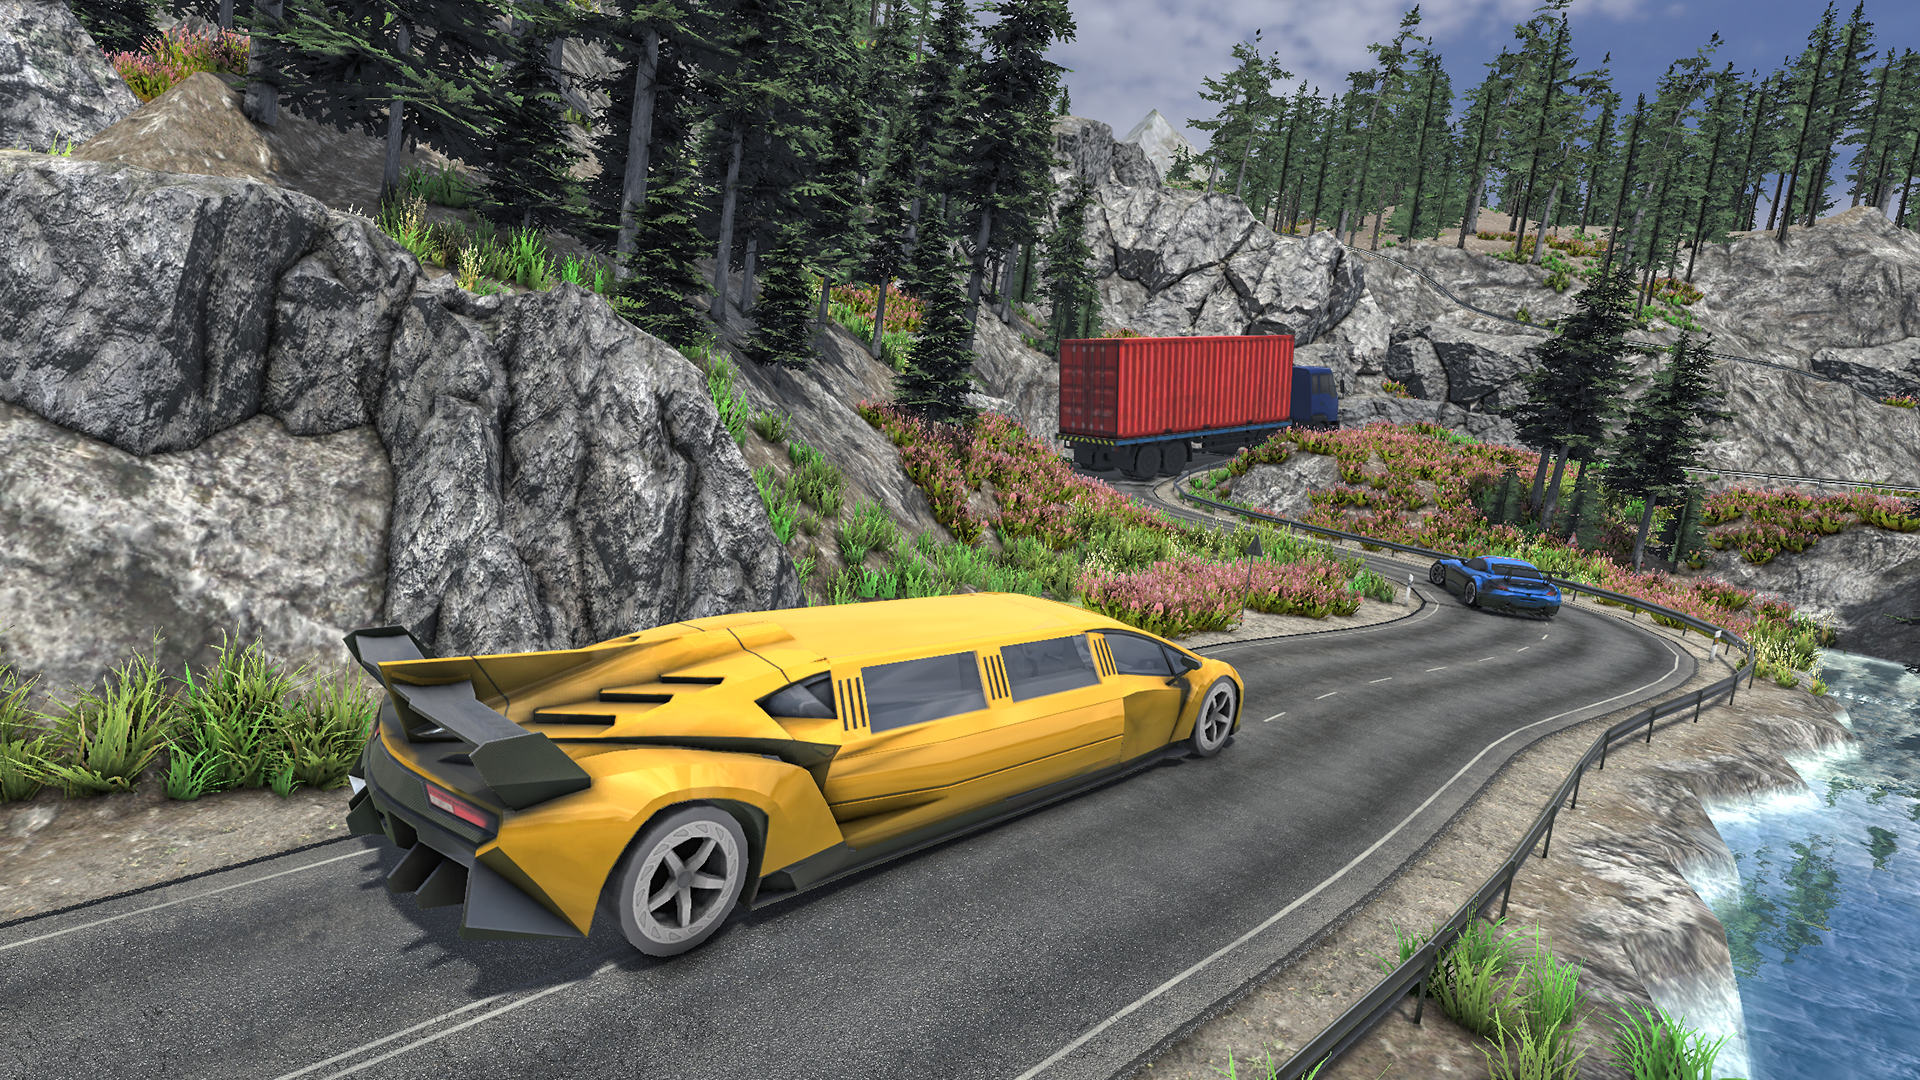 Play Big City Limo Car Driving Simulator Game